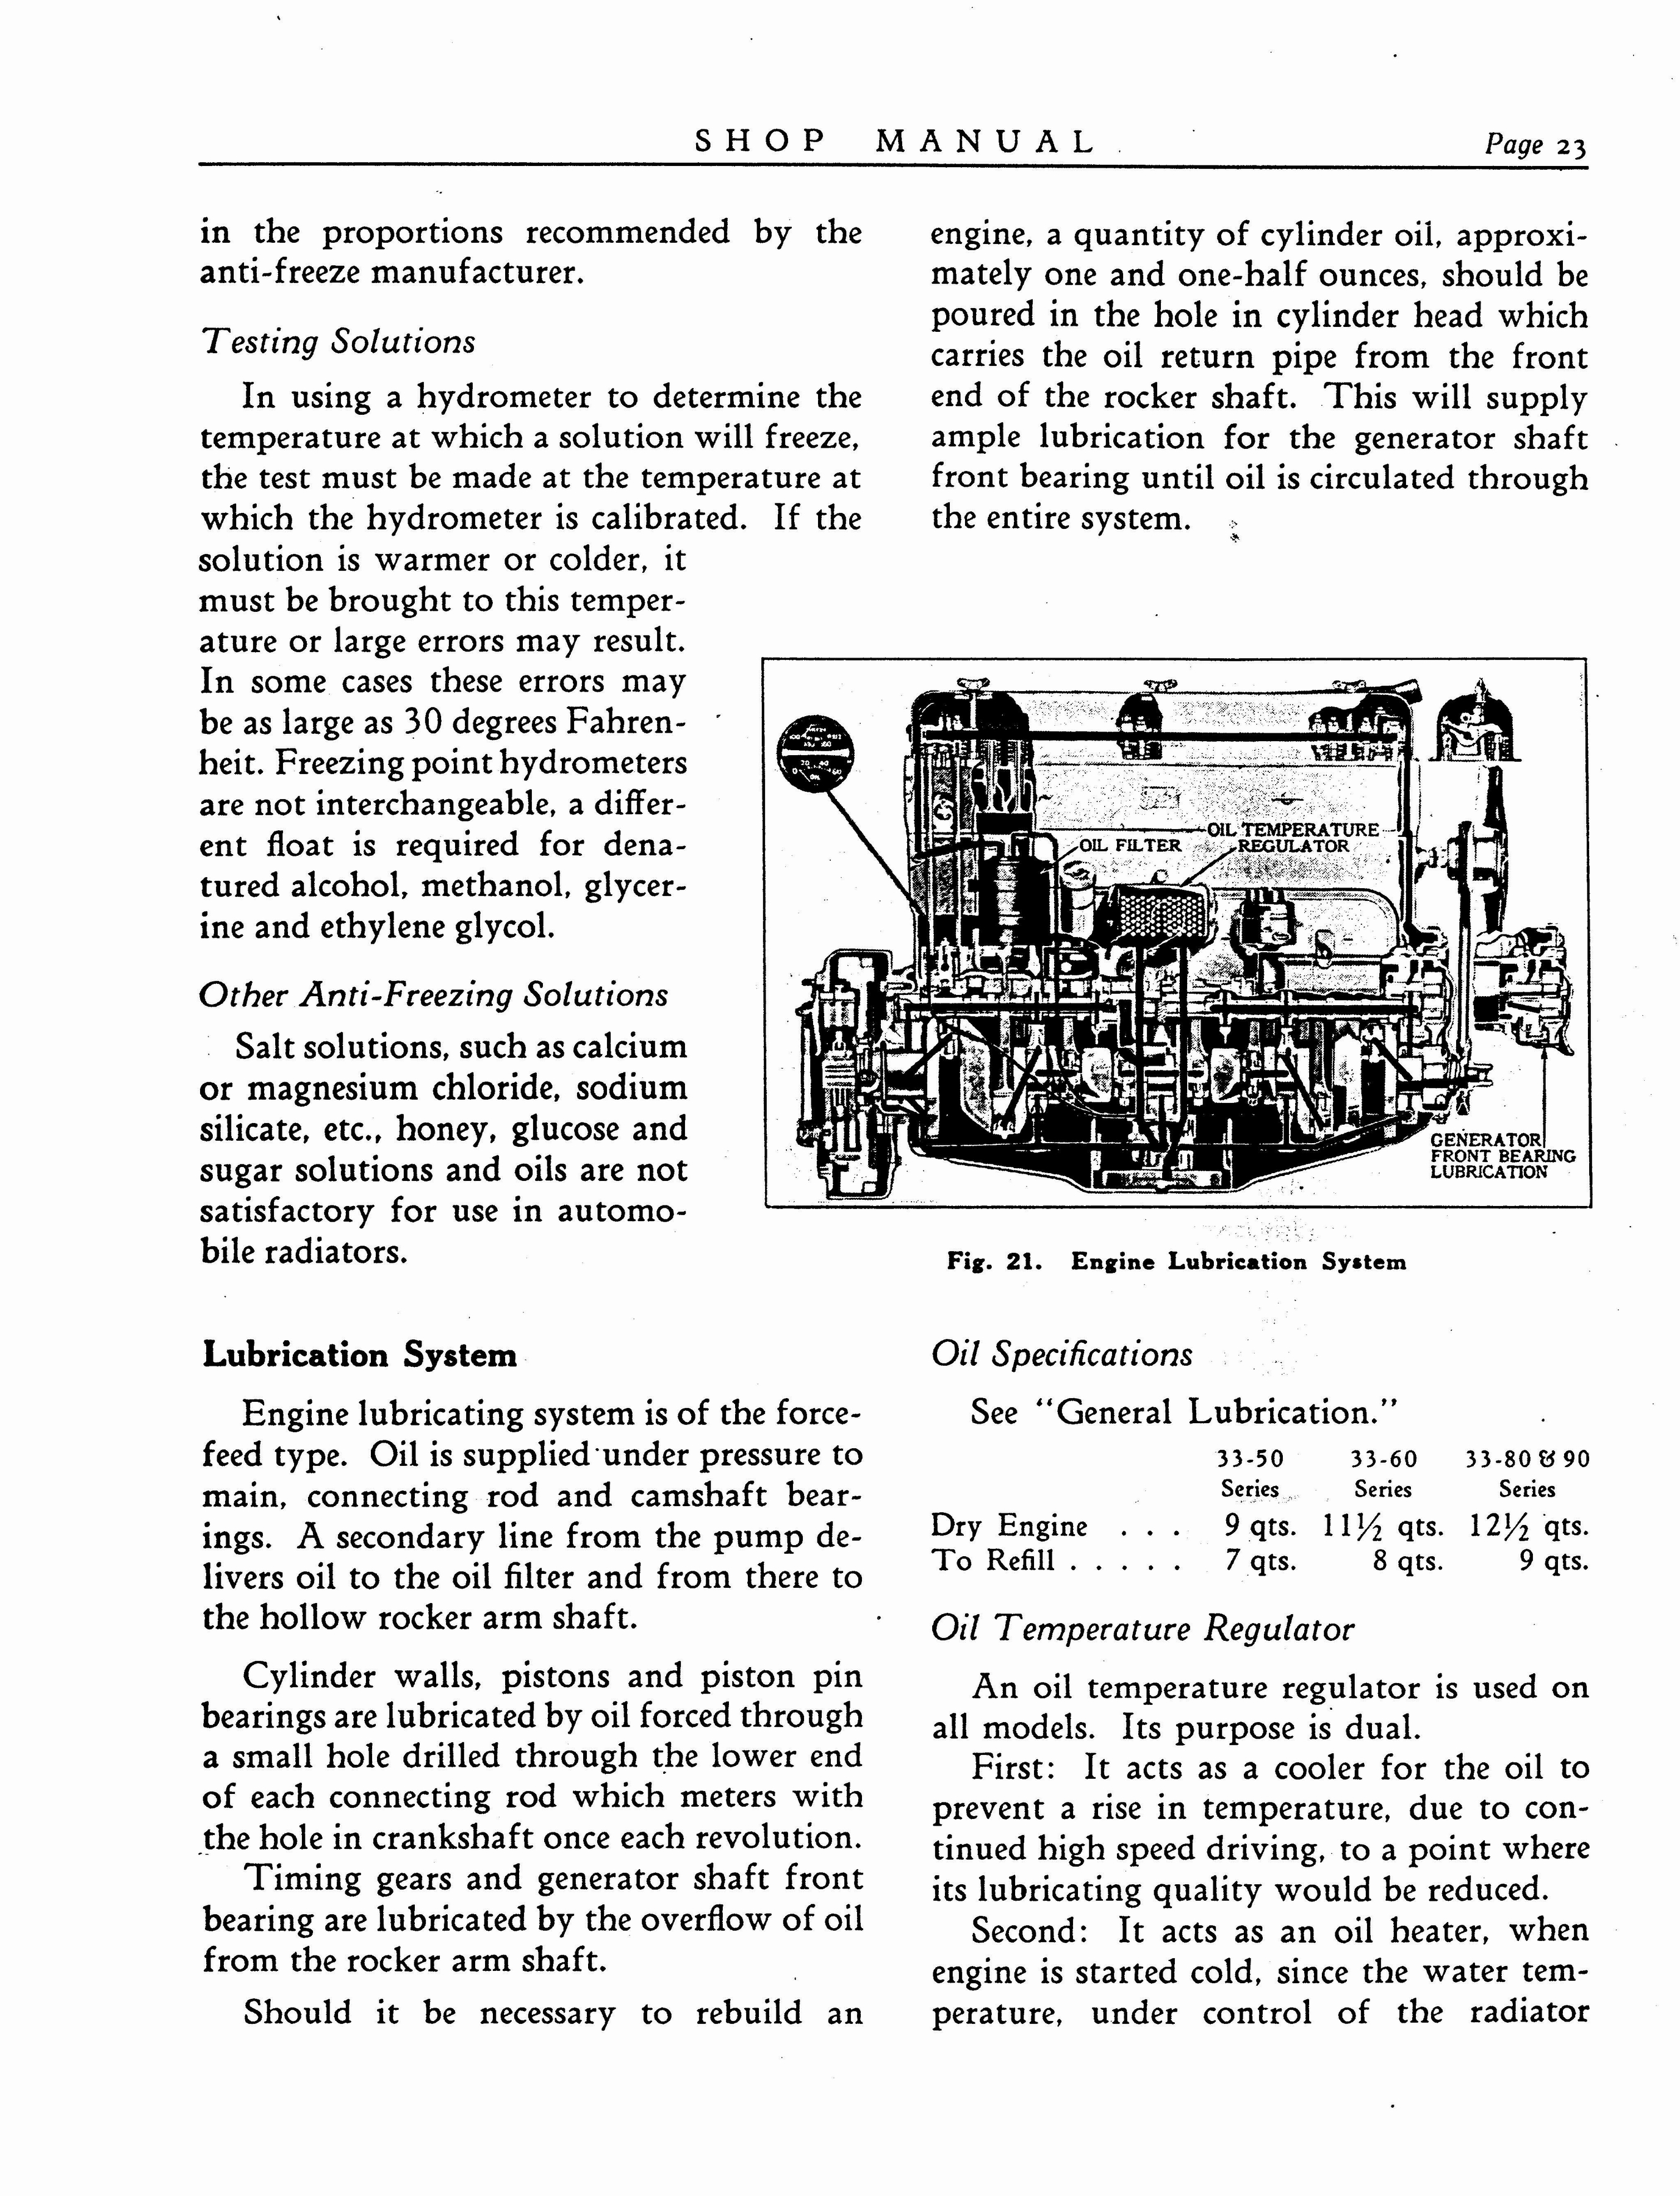 n_1933 Buick Shop Manual_Page_024.jpg